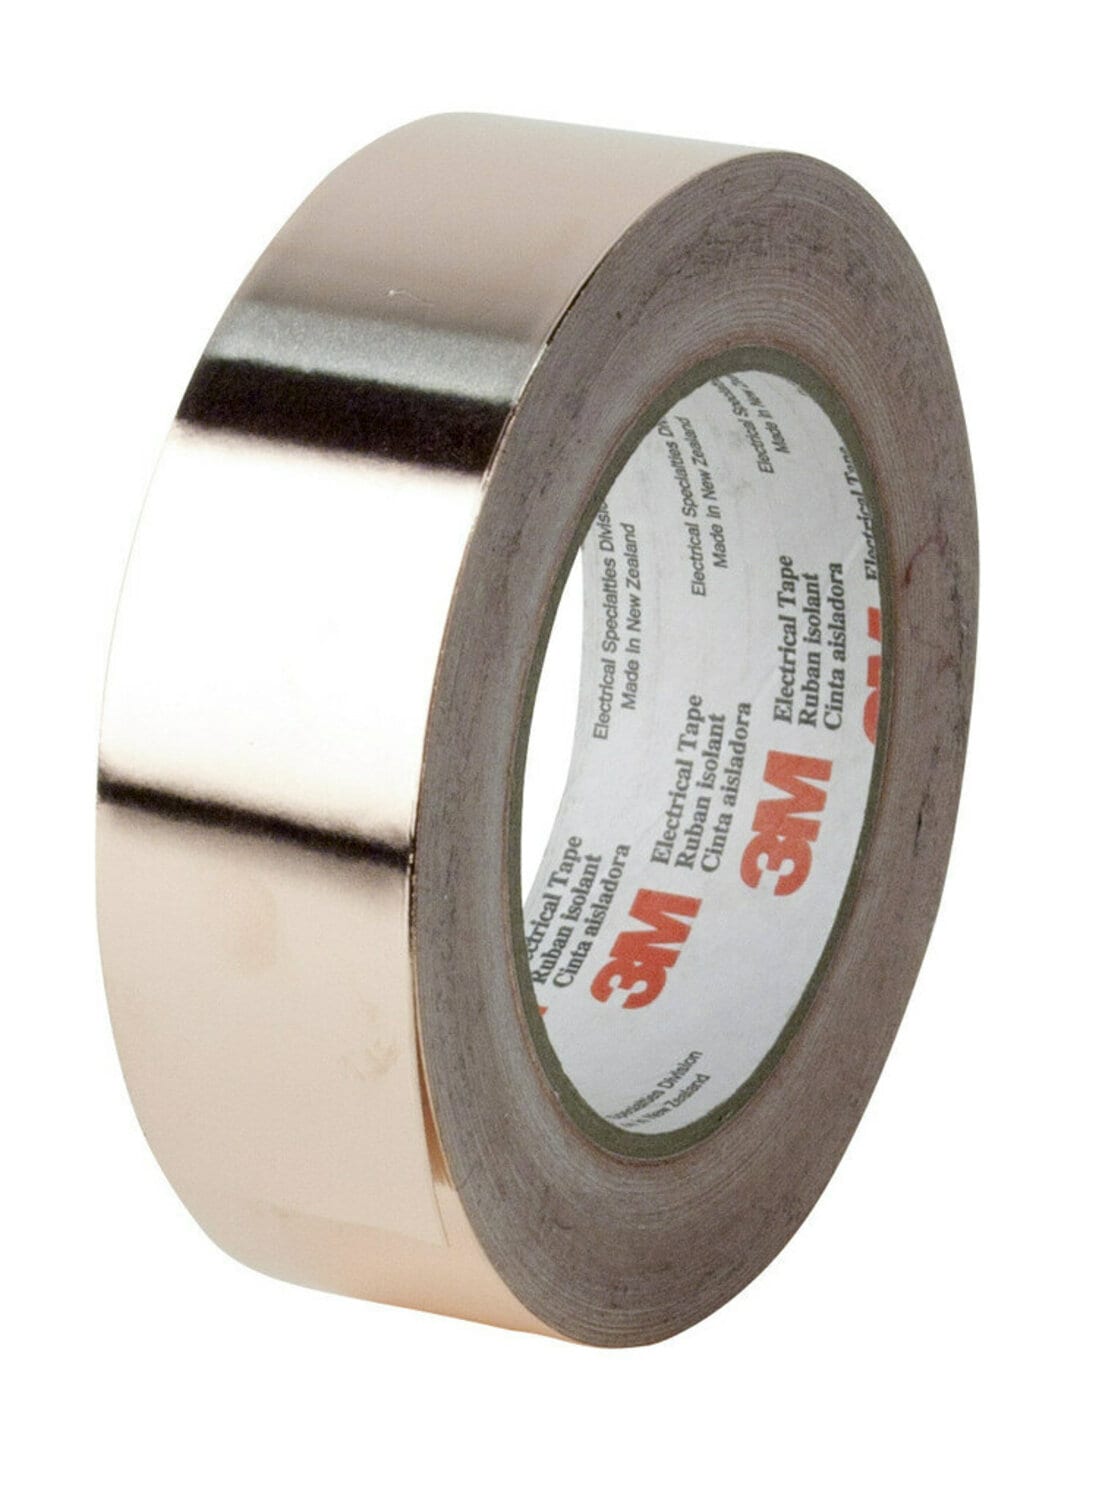 7010399747 - 3M Copper Foil EMI Shielding Tape 1194, 7.7 in X 10 in sheet, 10
Sheets/Bag